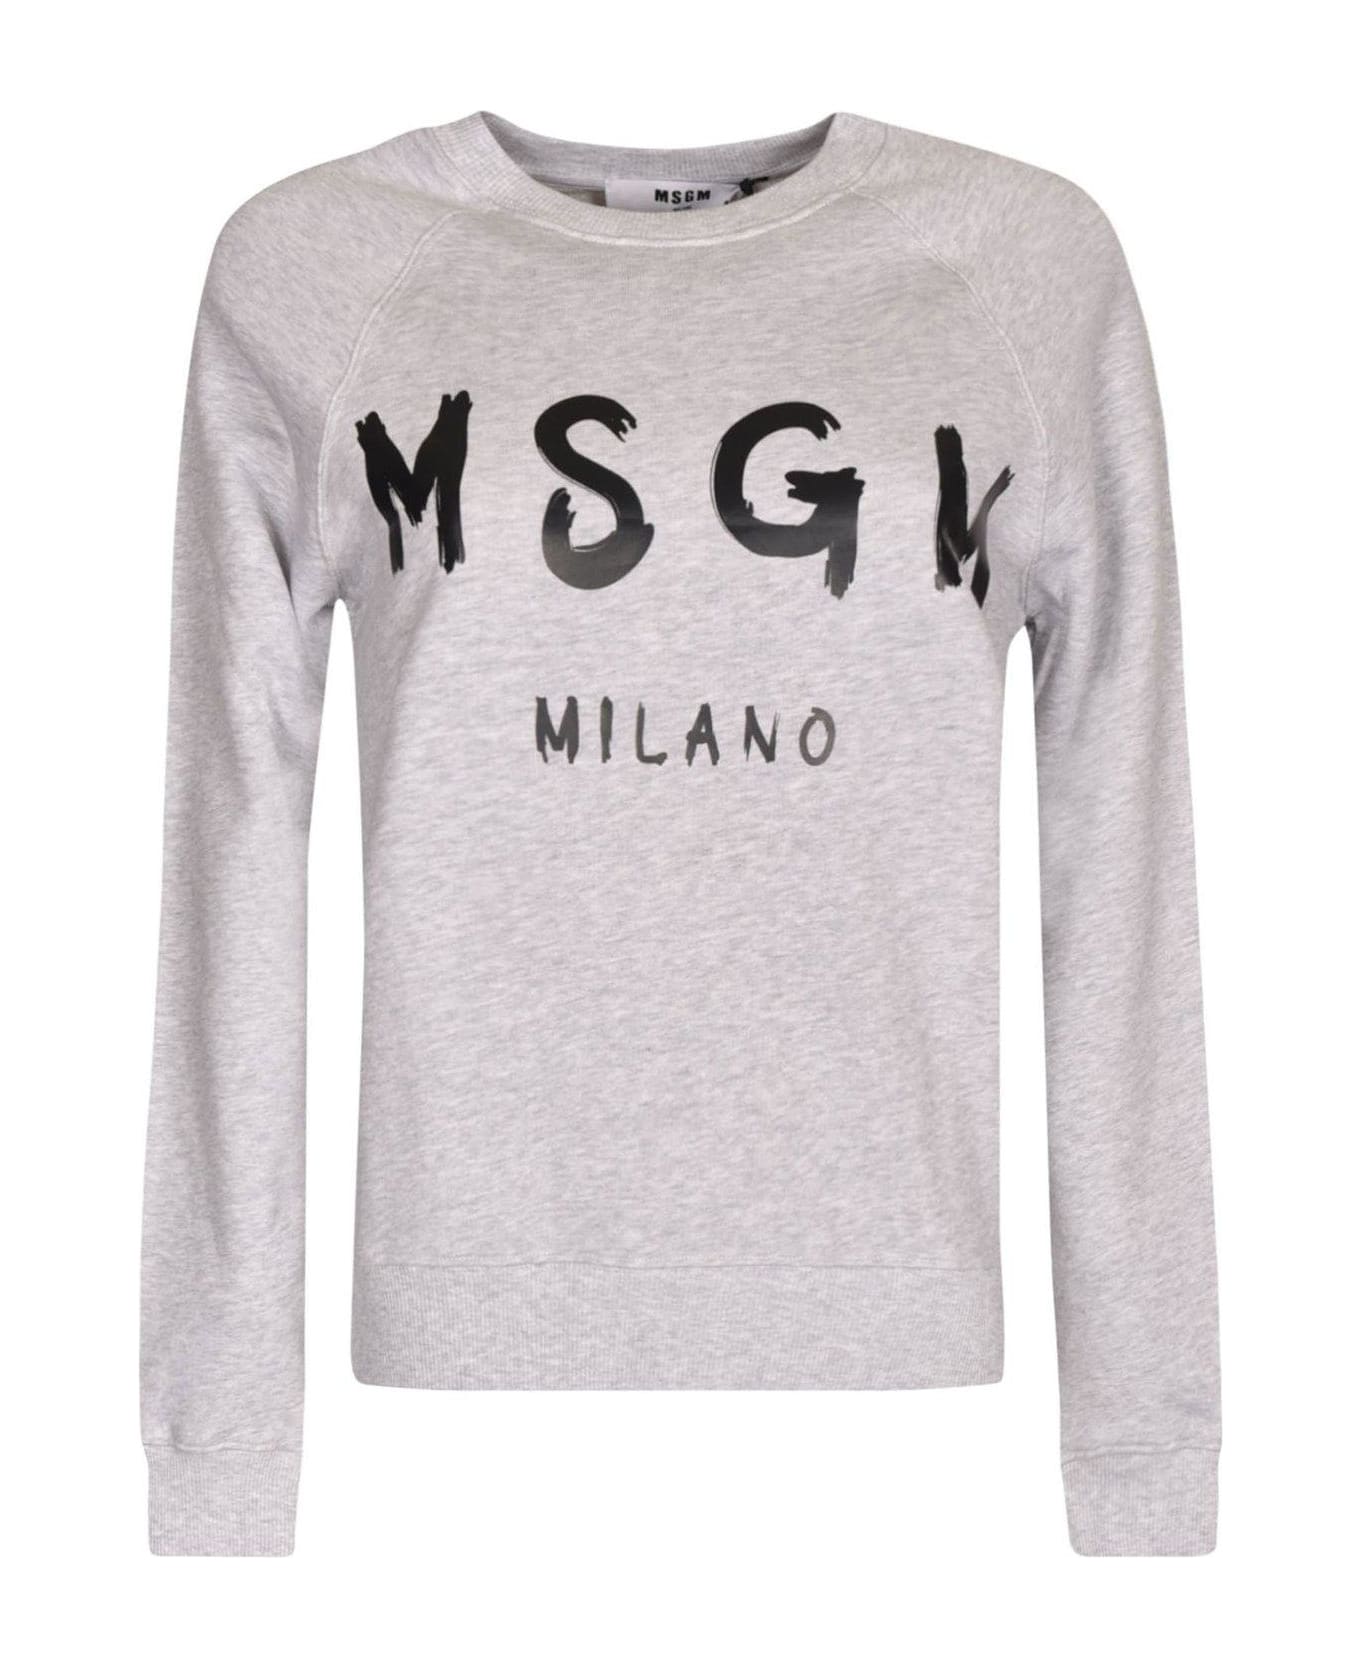 MSGM Logo Printed Crewneck Sweatshirt - Grigio melange